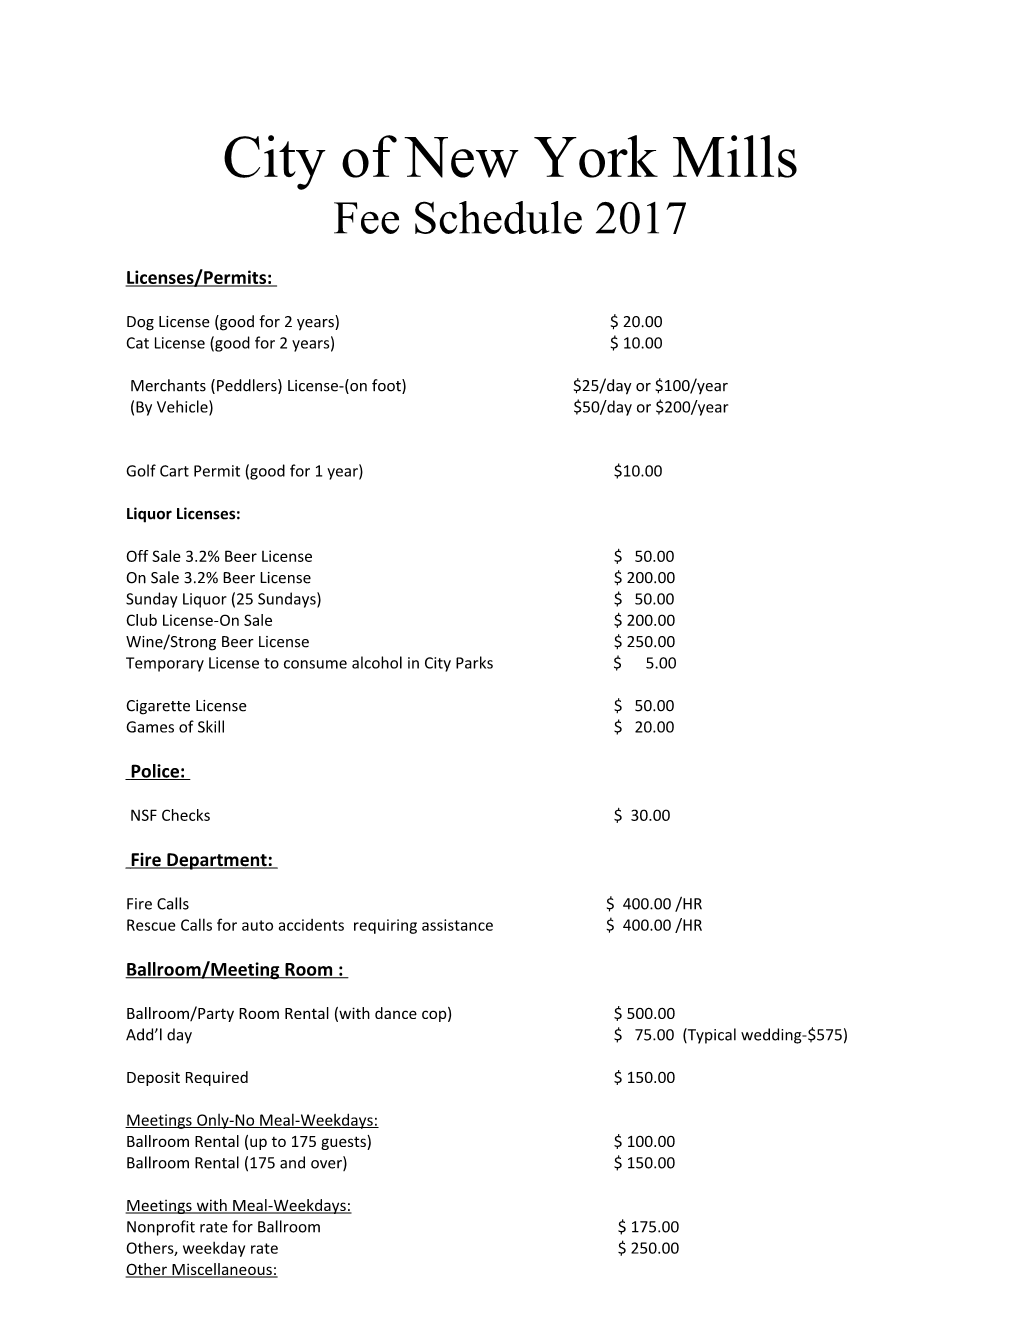 City of New York Mills Fee Schedule 2017